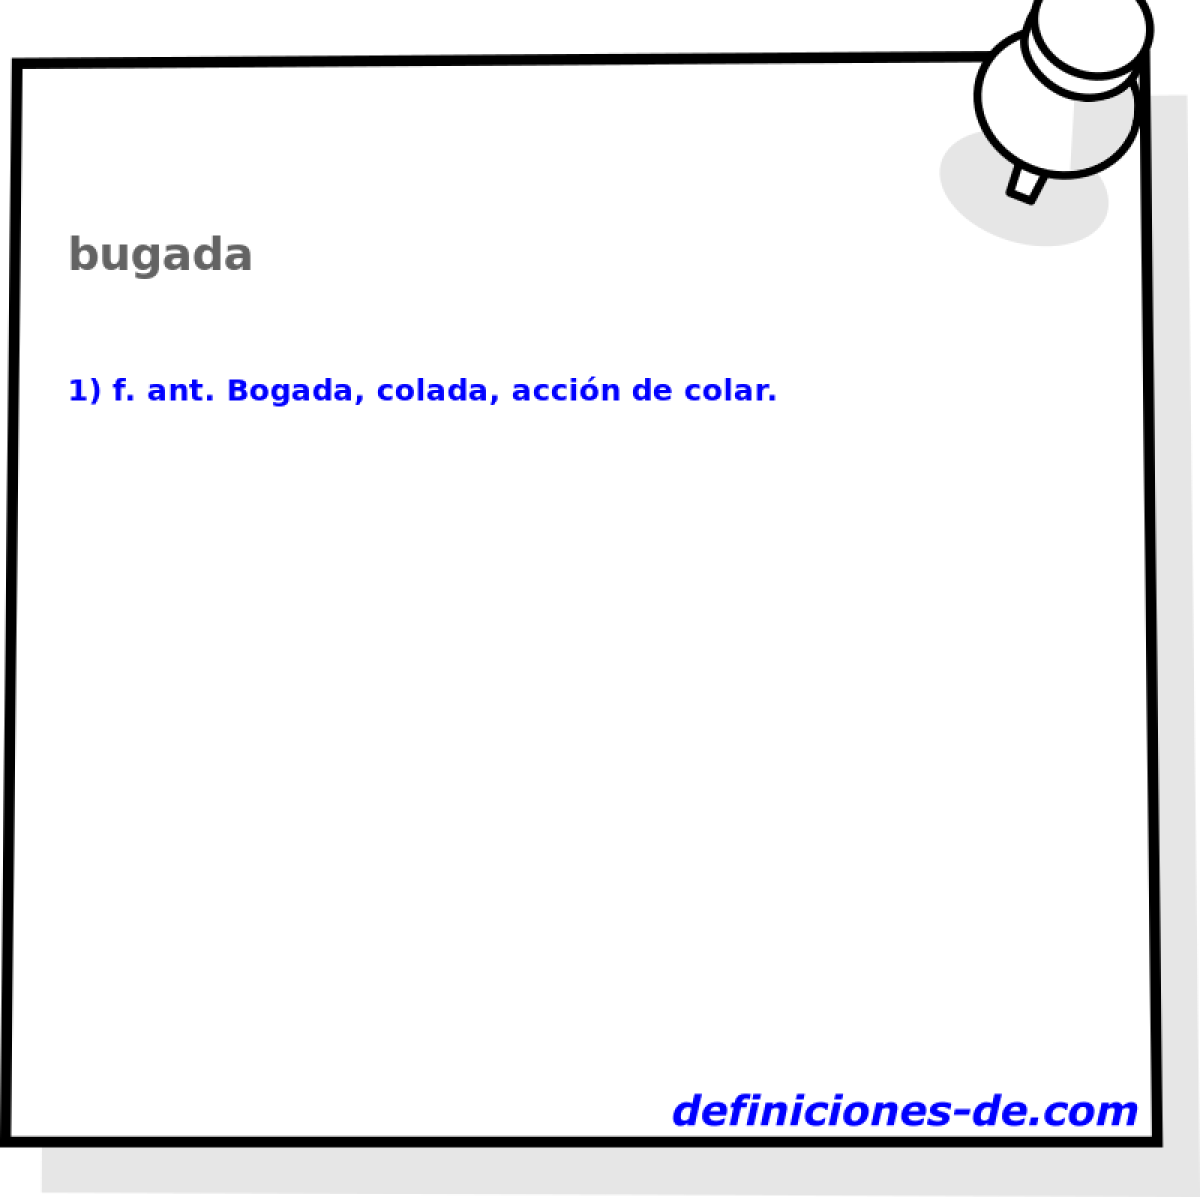 bugada 